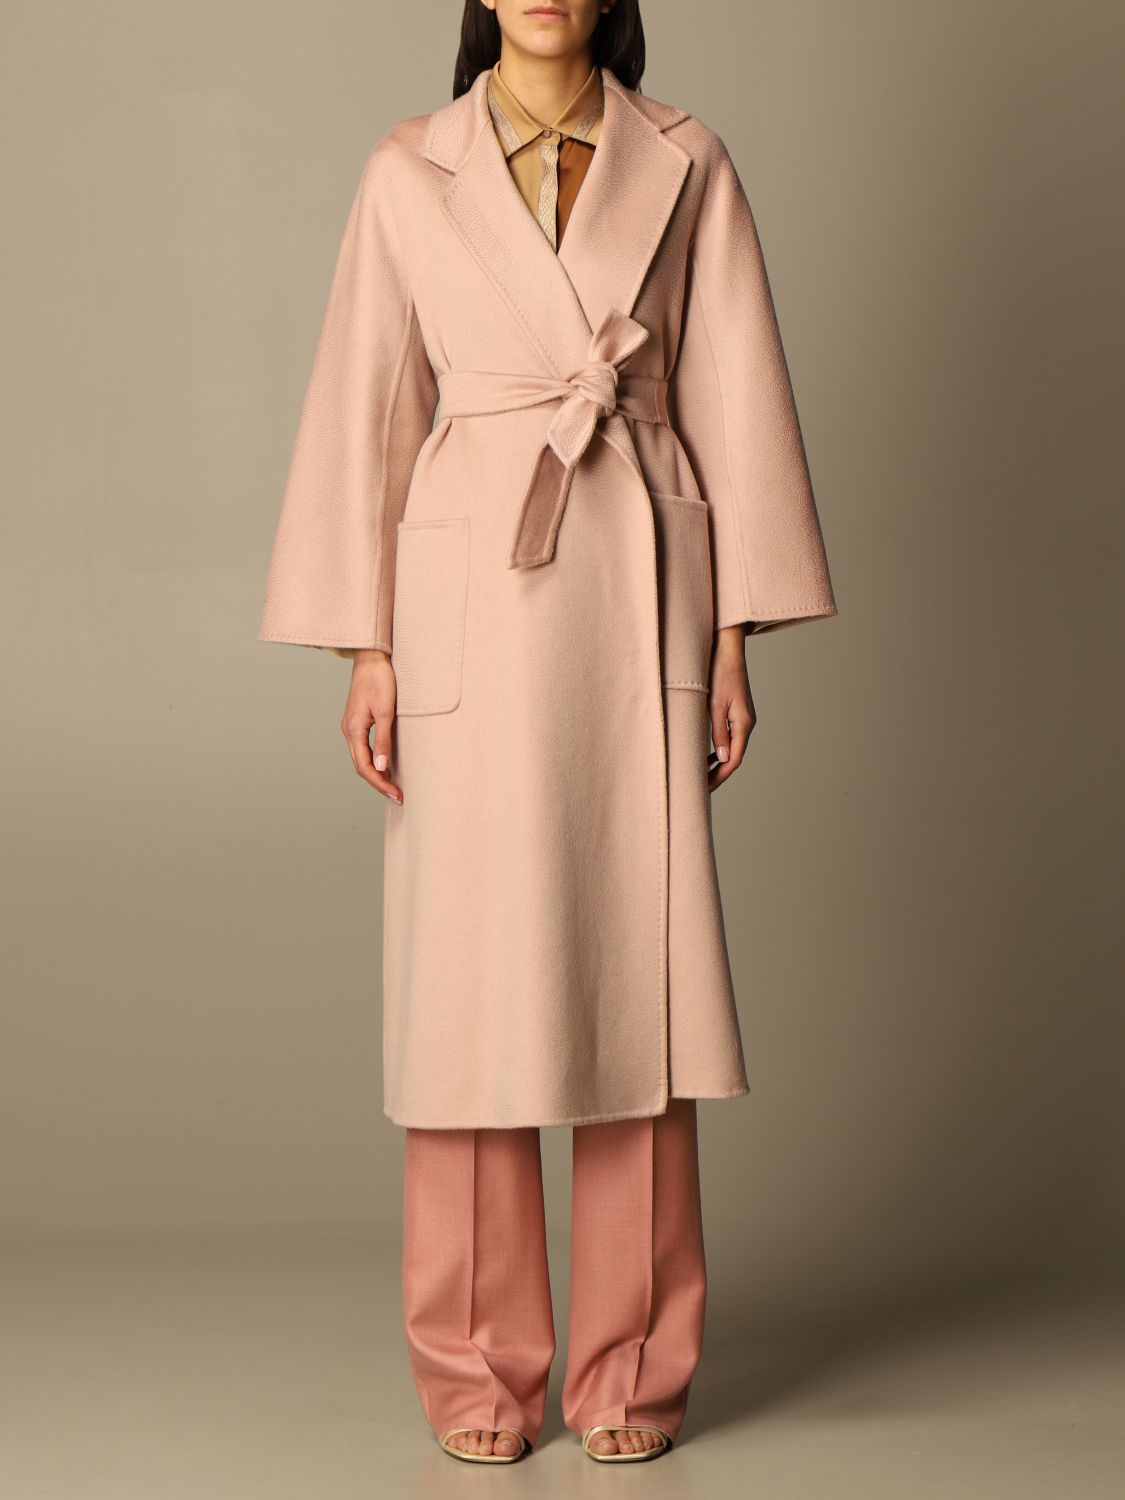 MAX MARA: Labbro coat in cashmere - Blush Pink | Max Mara coat ...